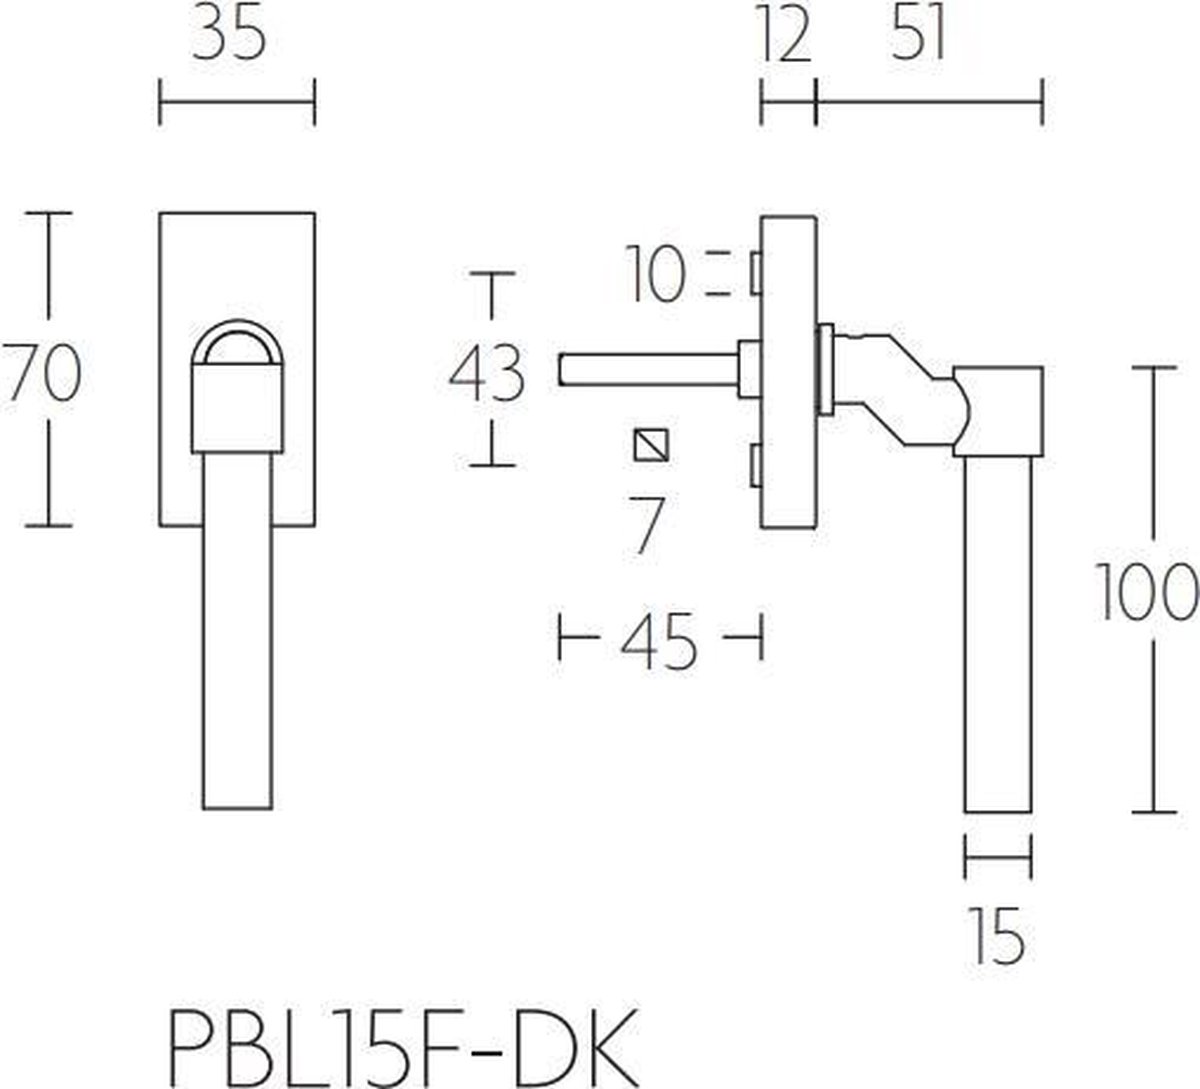 Formani ONE PBL15F-DK draaikiepgarnituur mat zwart - verkropt